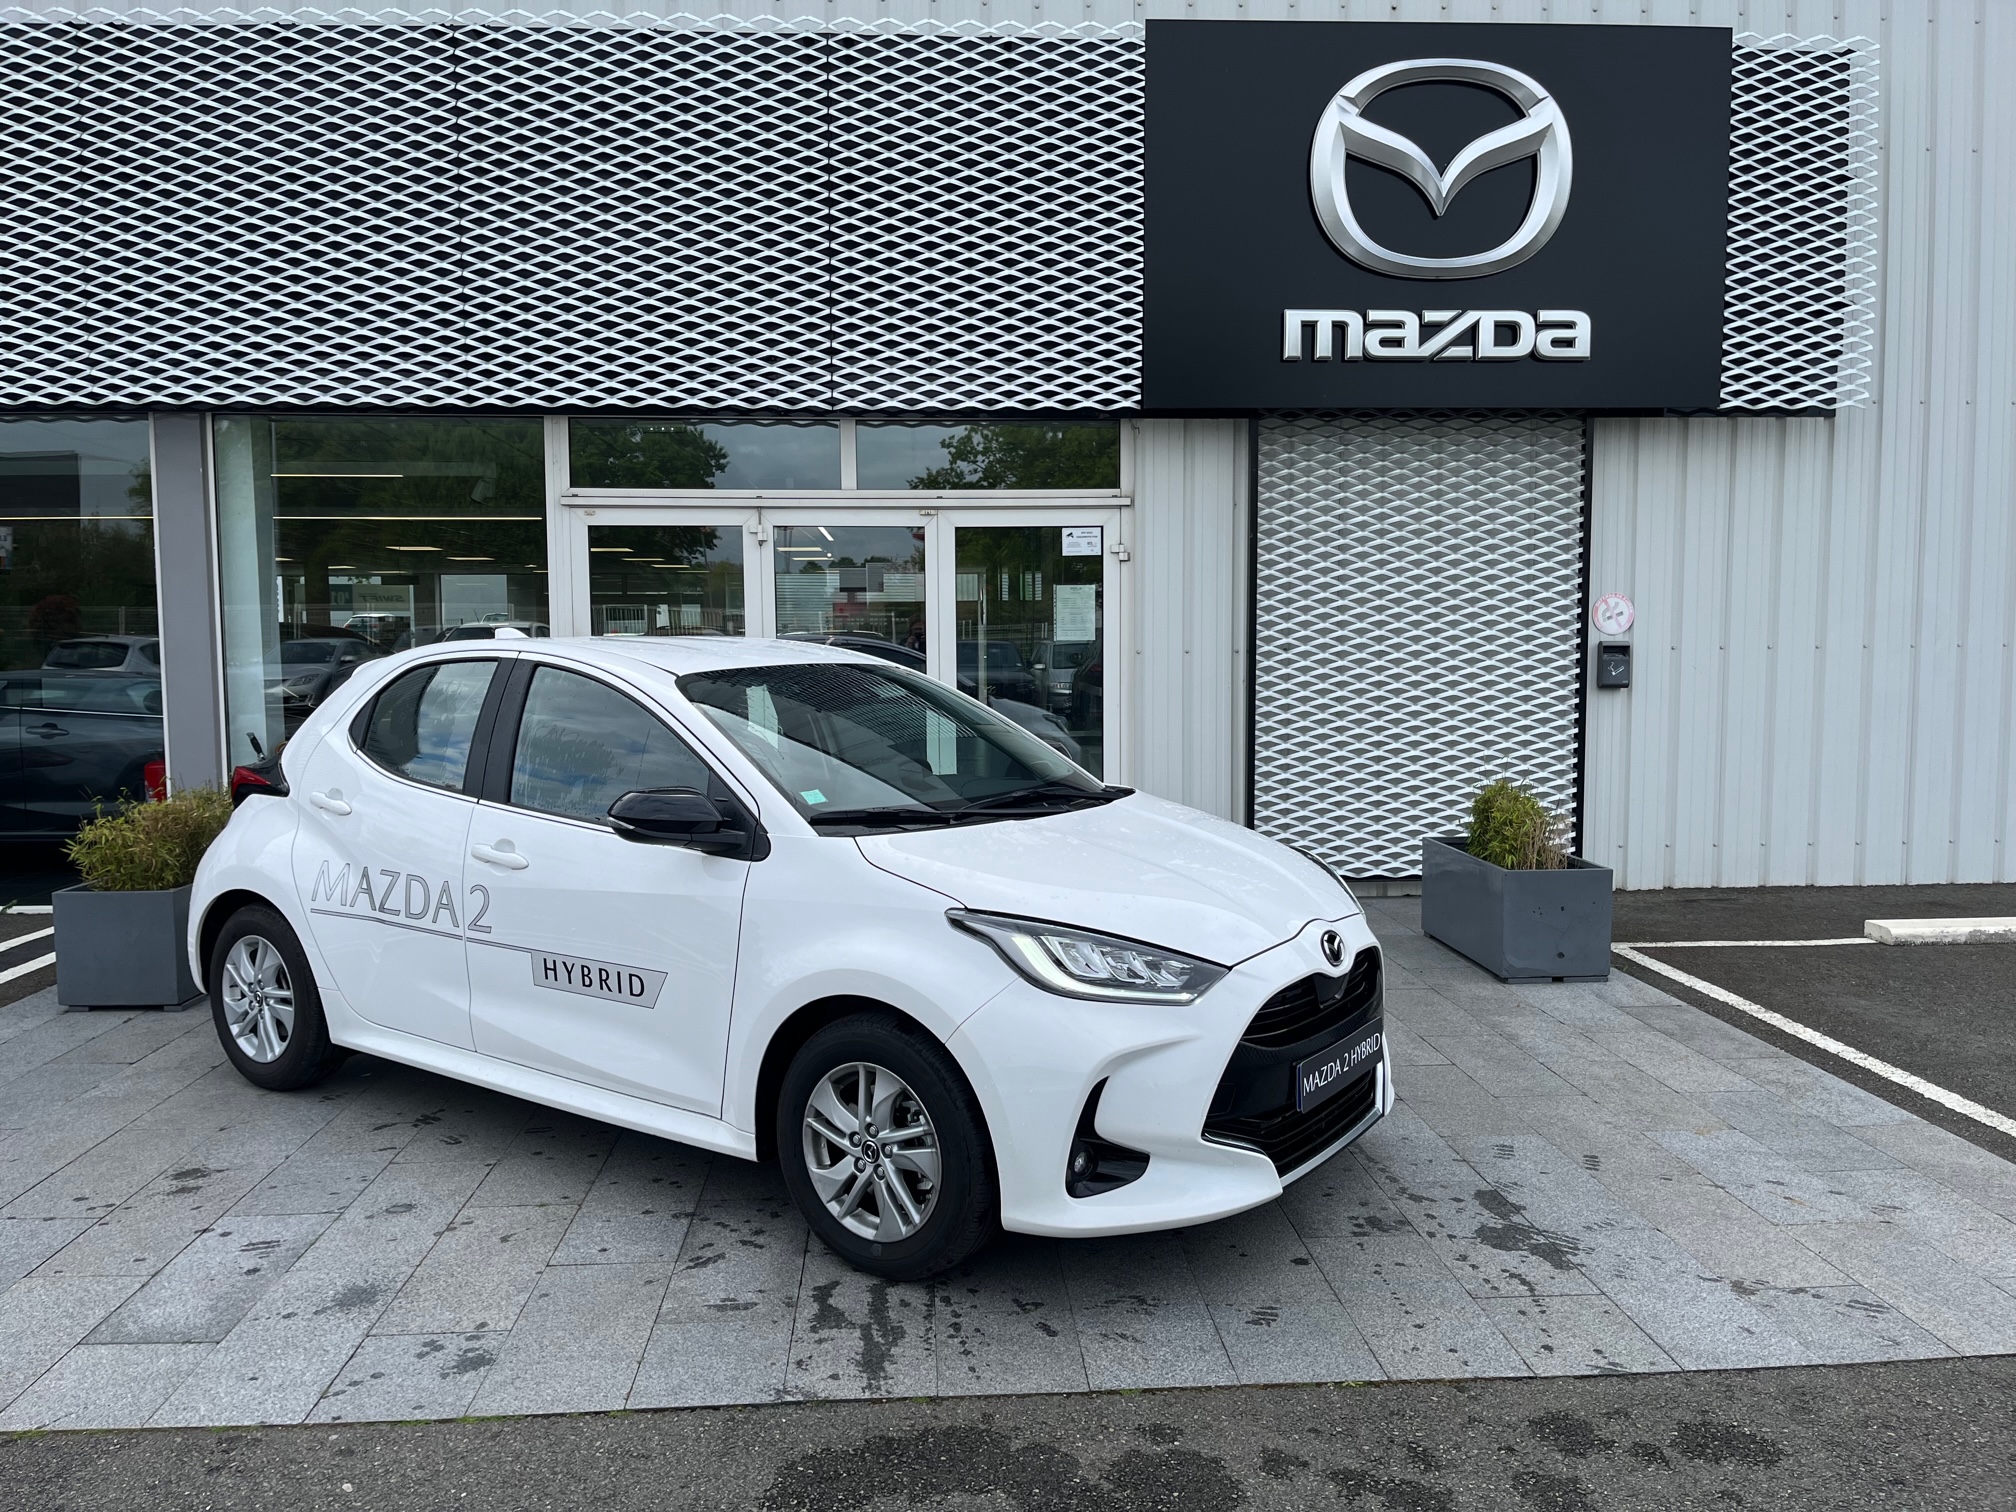 Véhicules Mazda neufs en stock à Laval (53000)